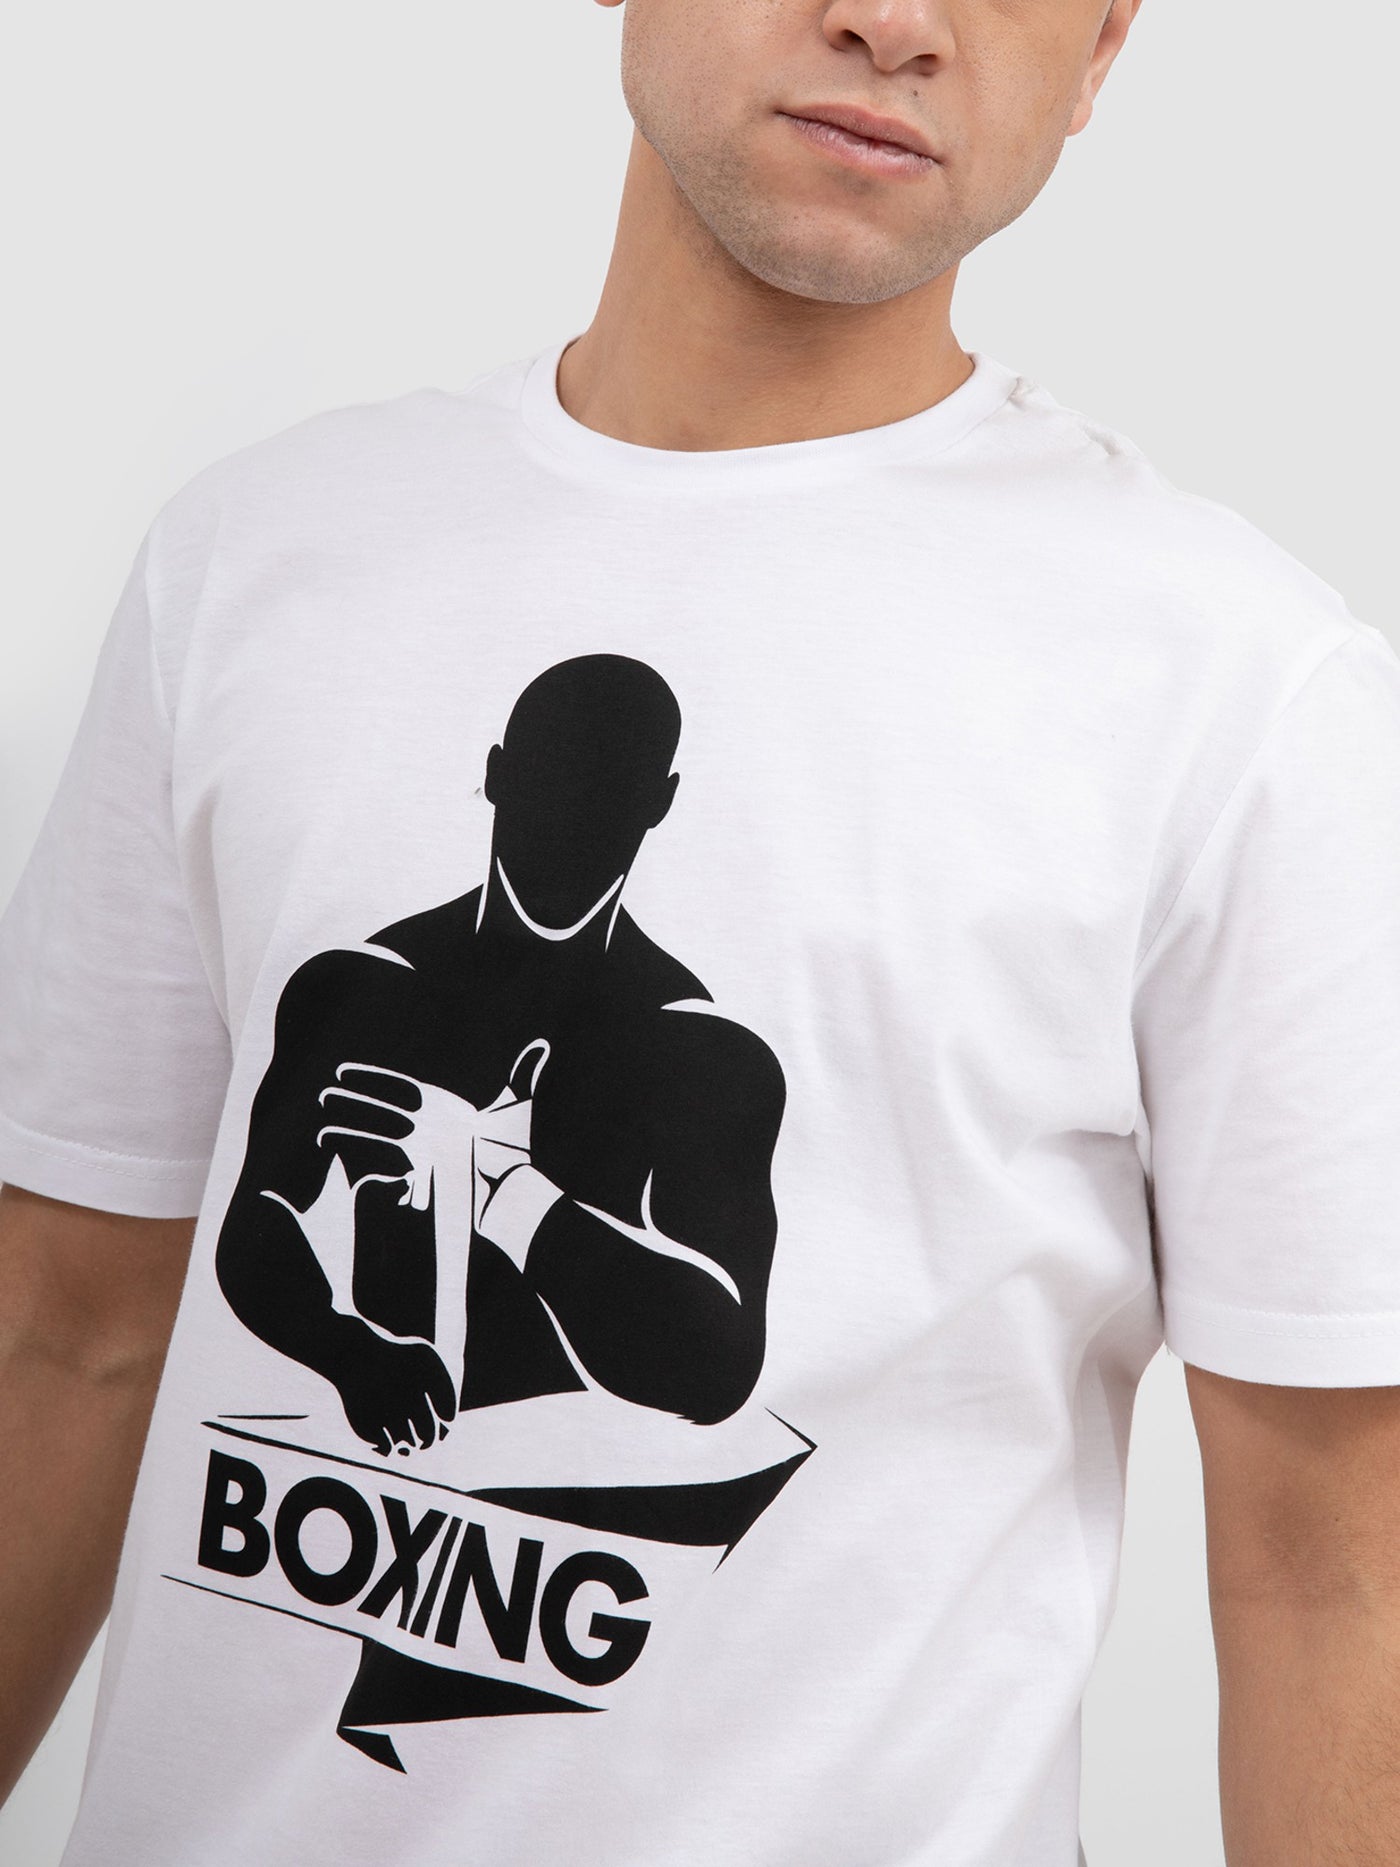 Premoda Mens Boxing Front Print T-Shirt